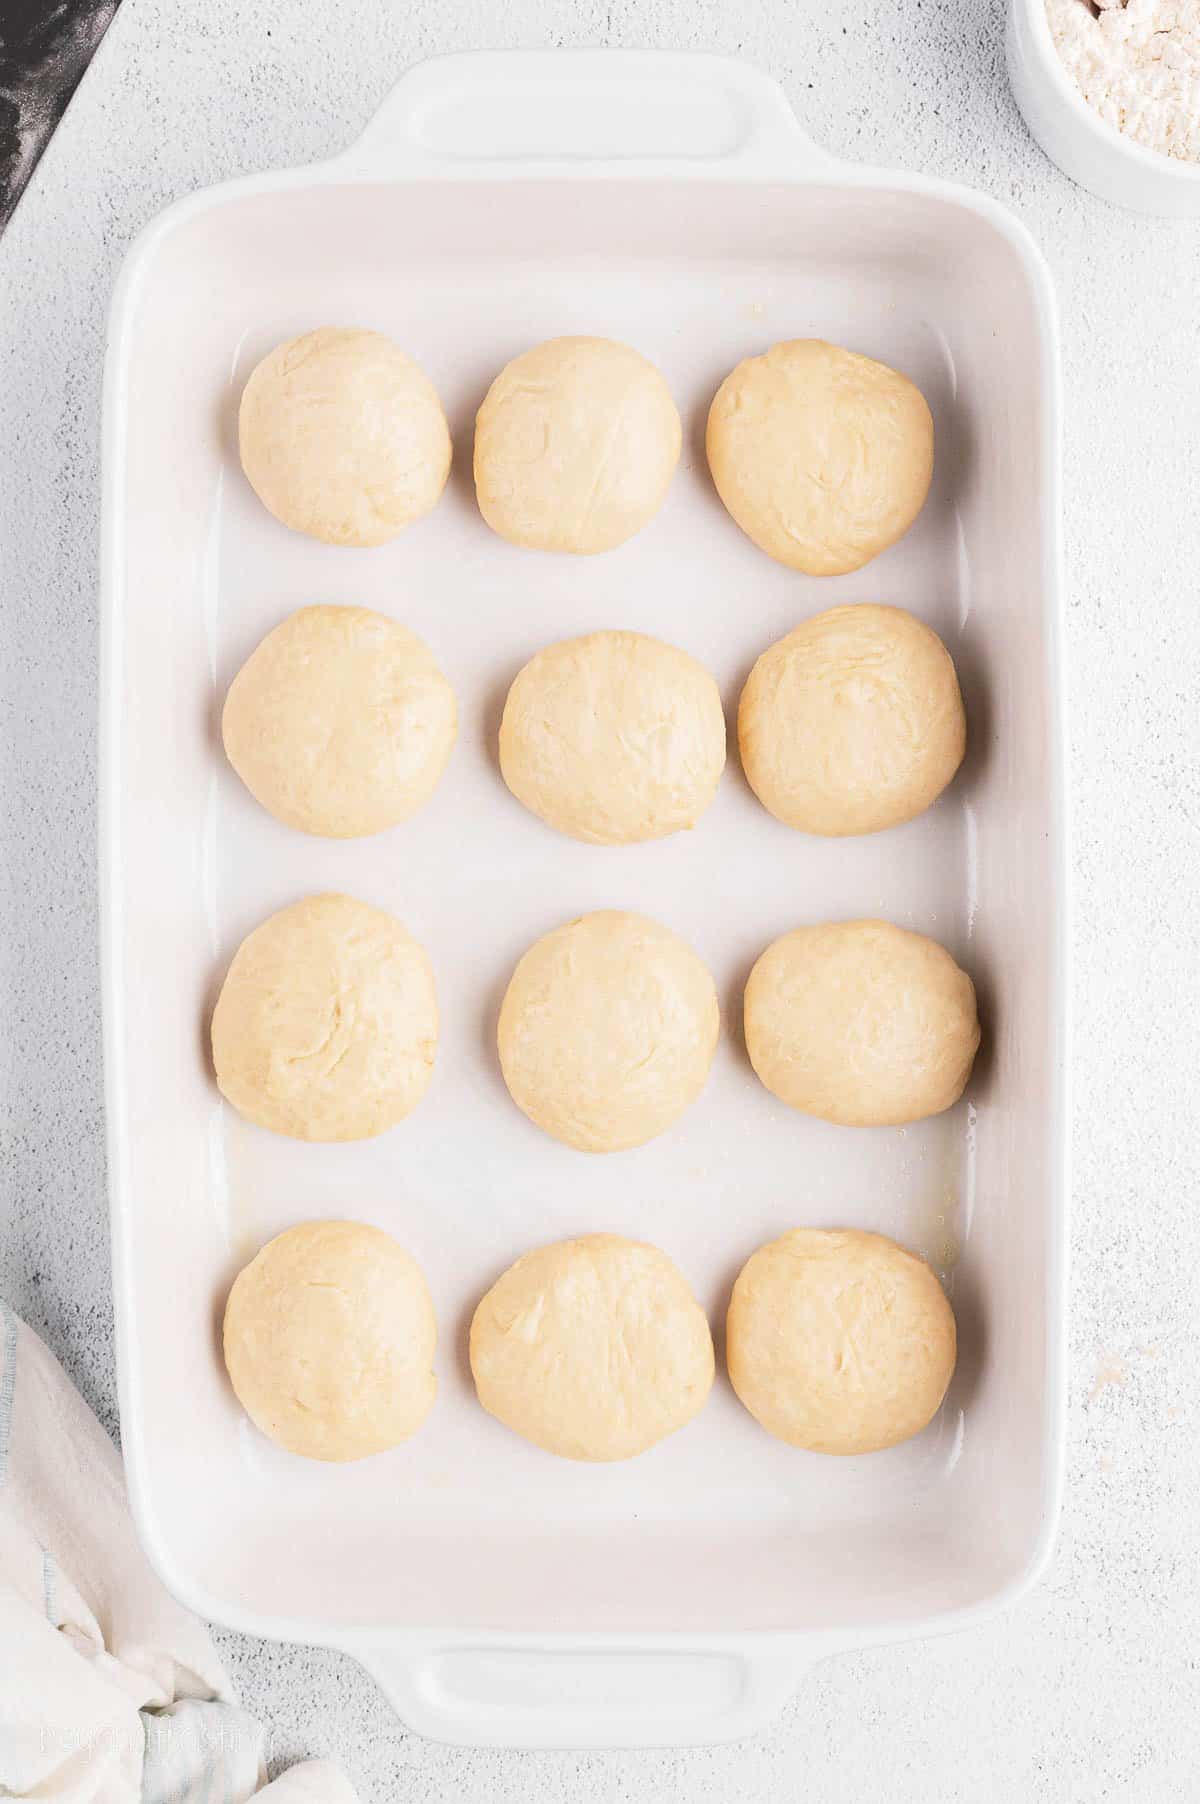 Balls of dough in a baking dish